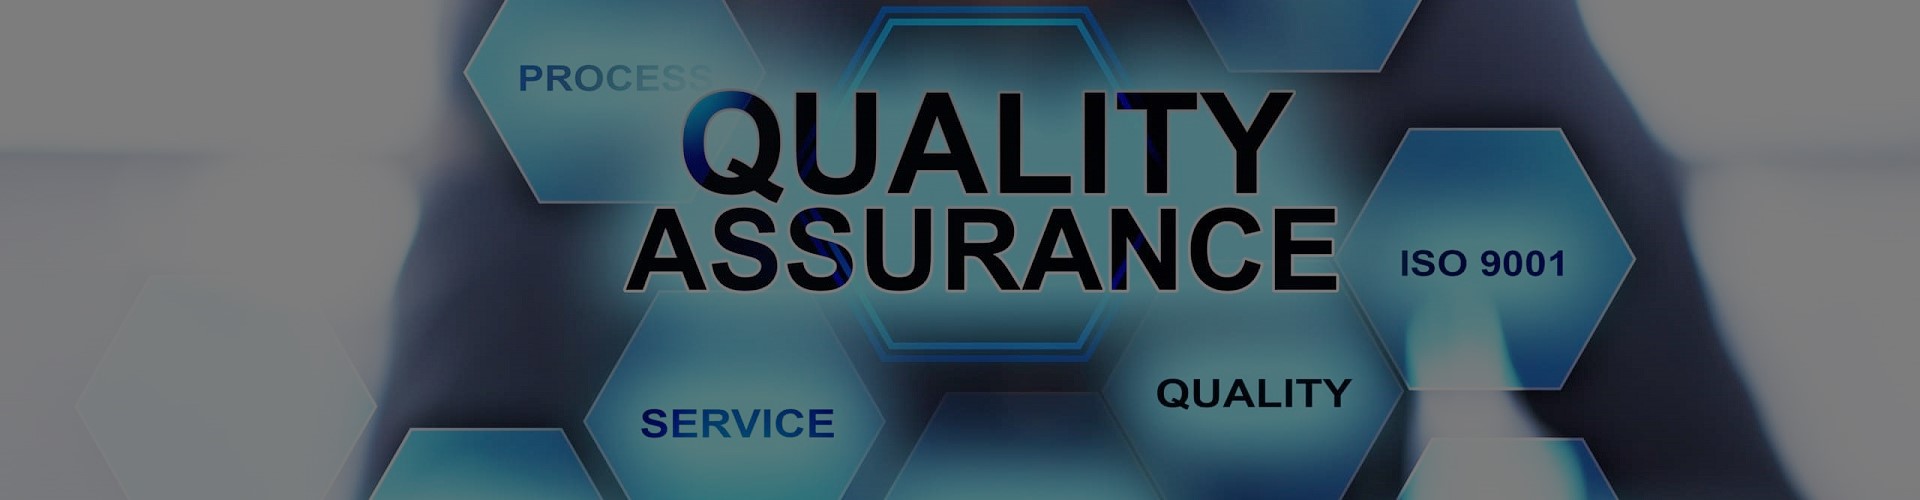 Services- QUALITY ASSURANCE